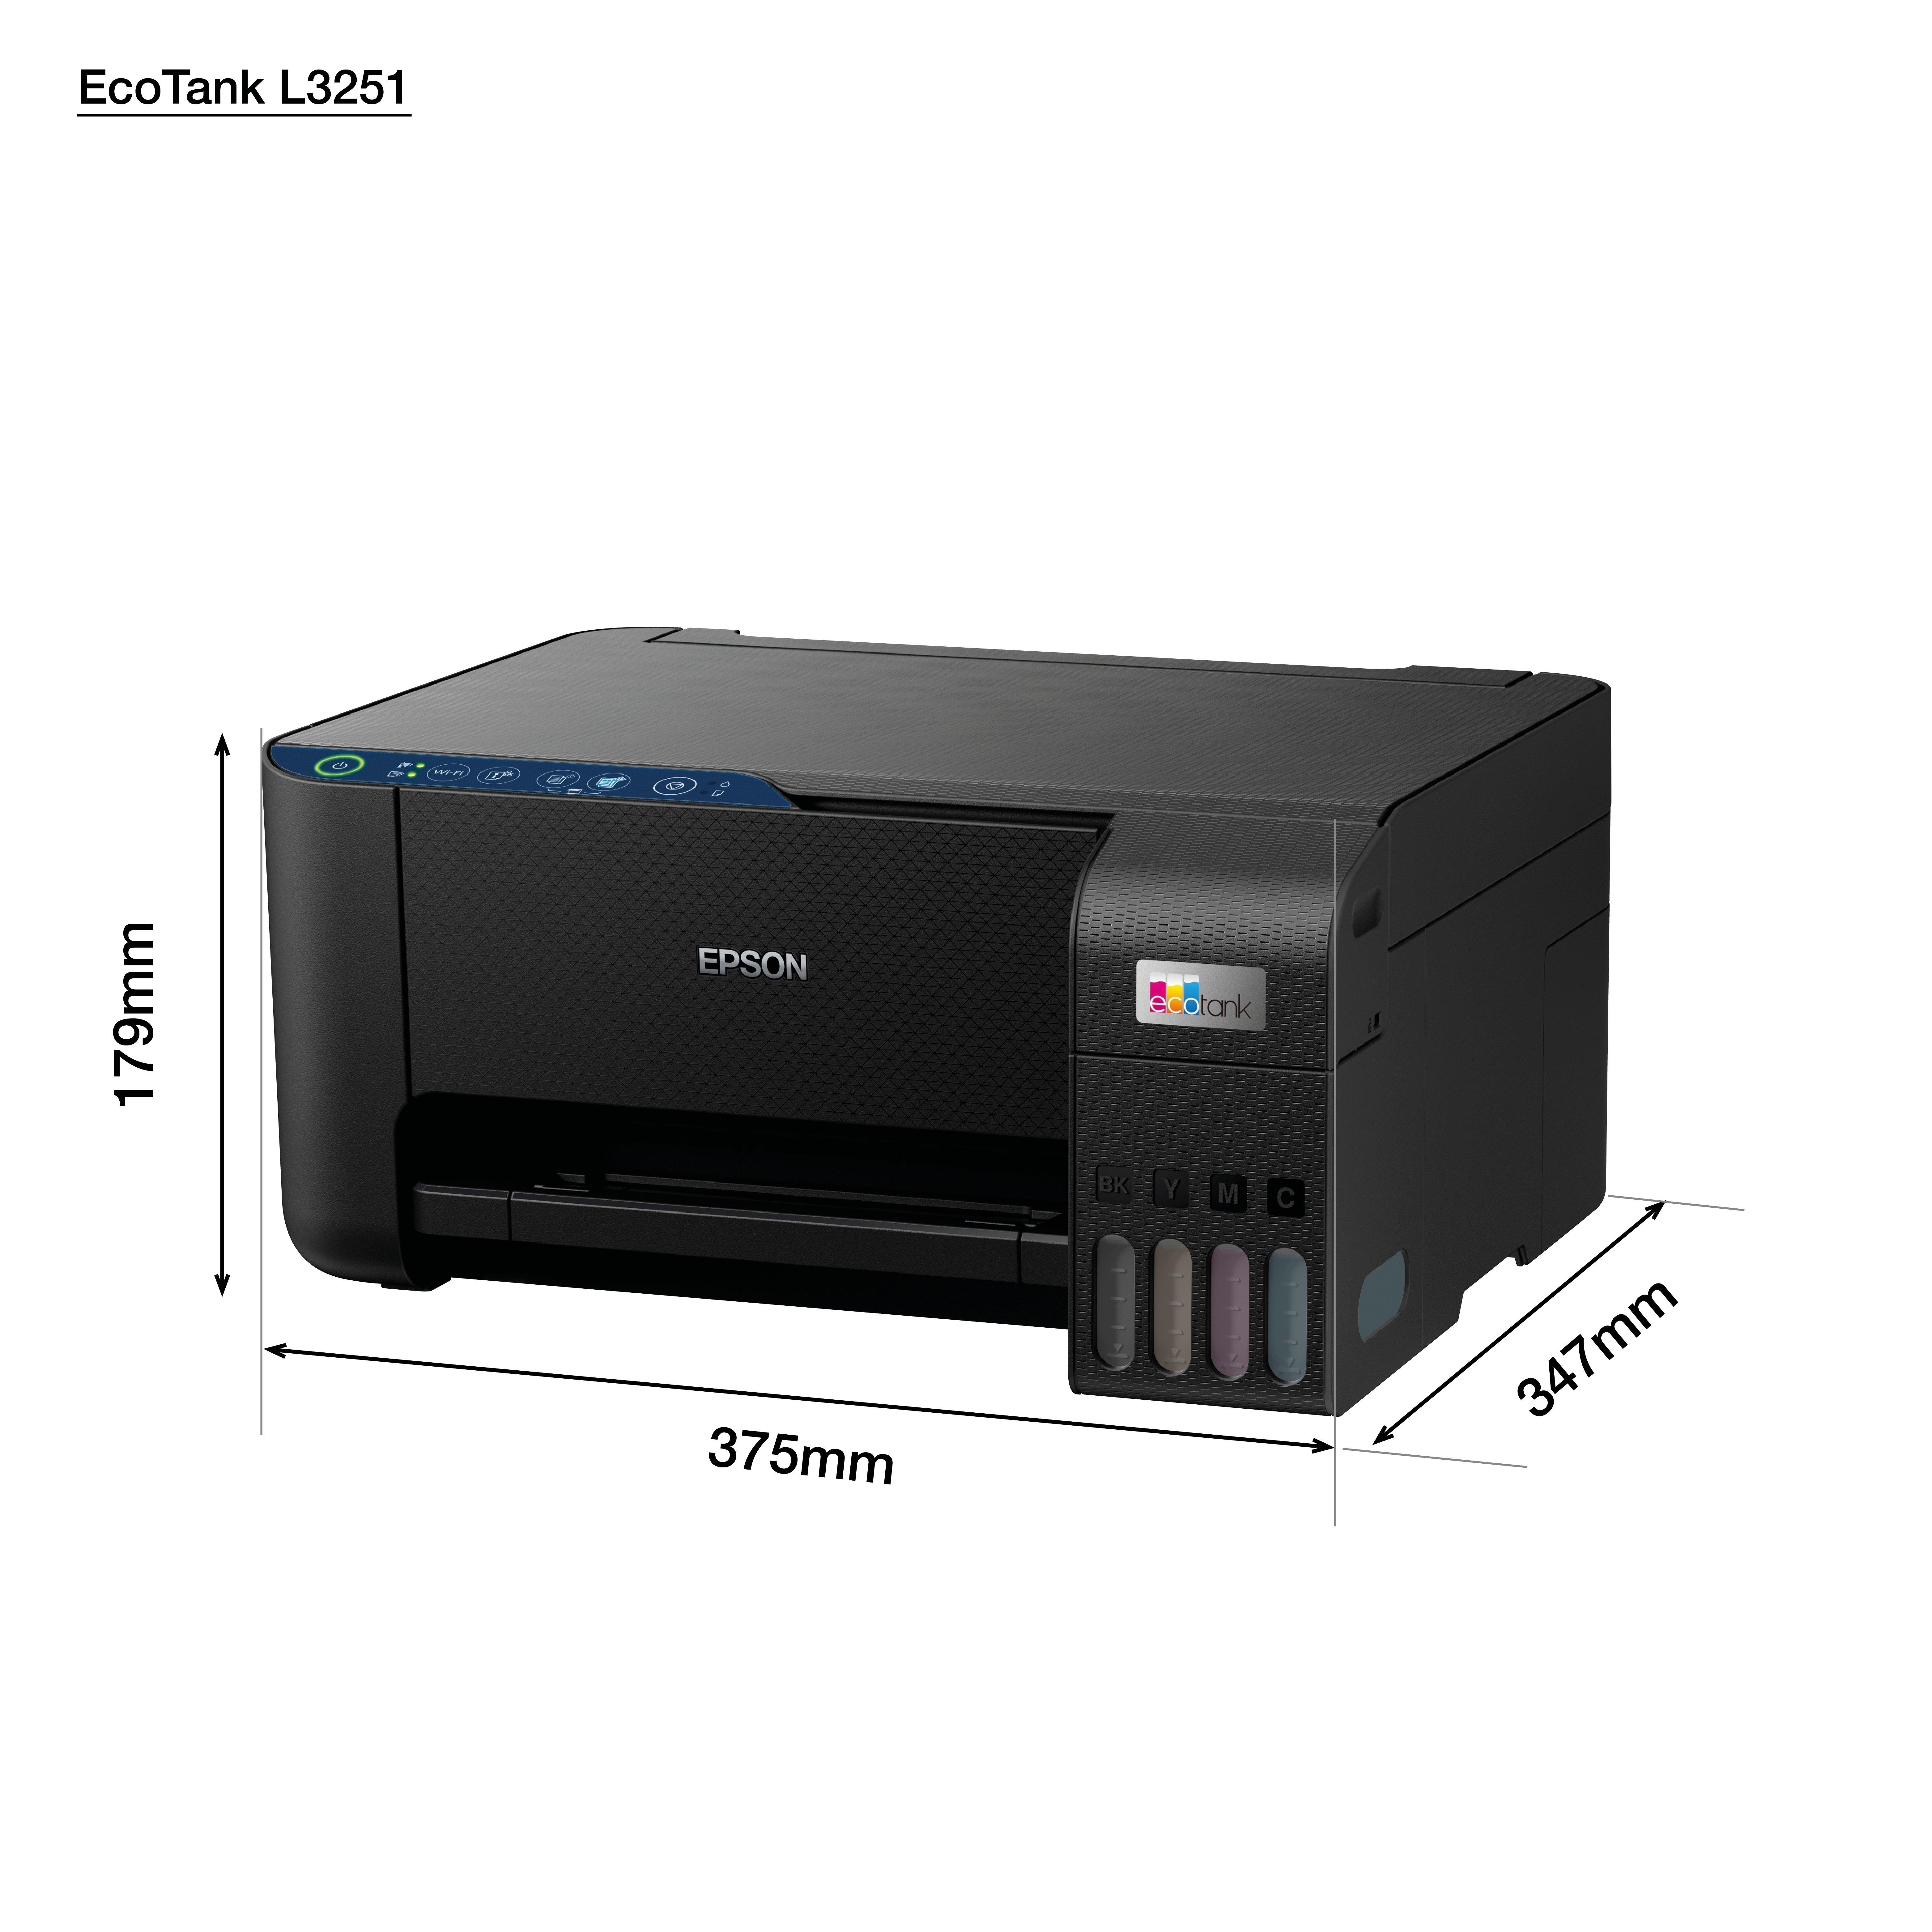 Epson l3110 printer driver download